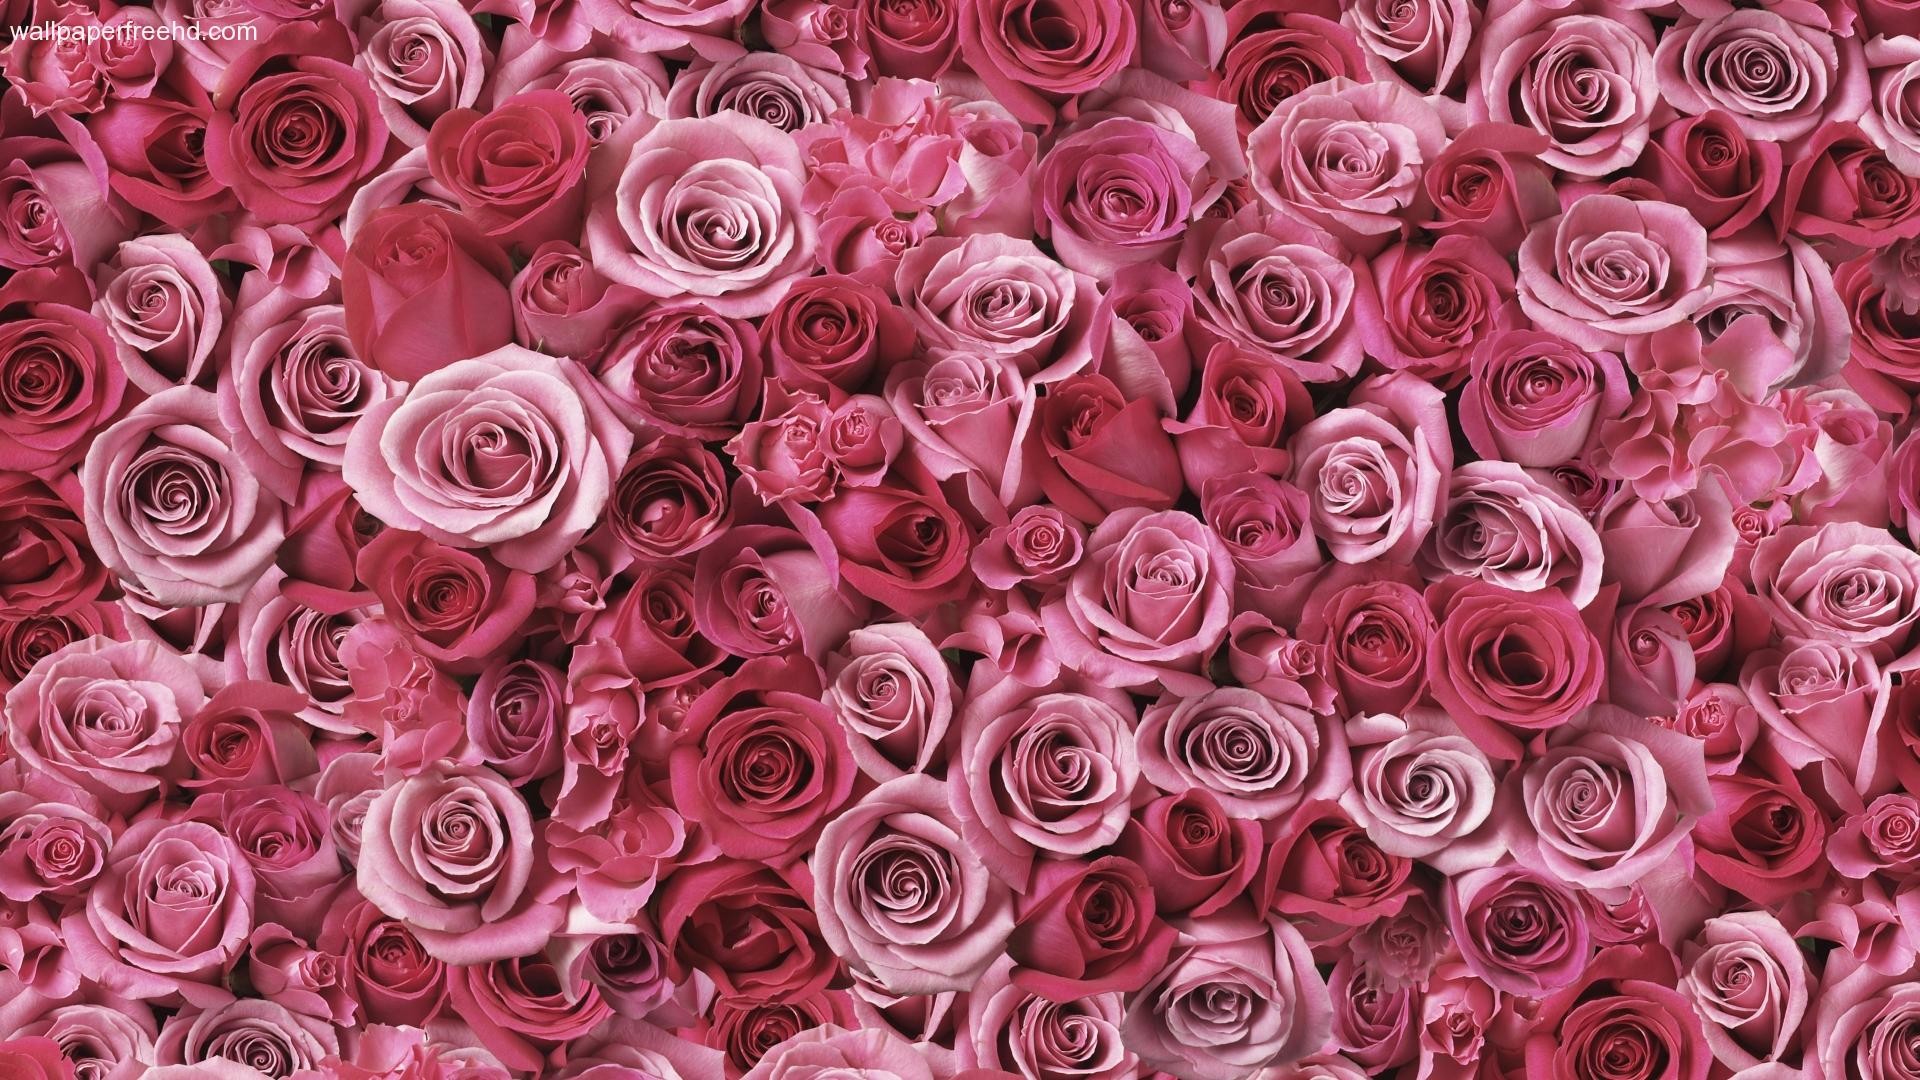 1920x1080 Download Best Pink Roses wallpaper HD Widescreen Wallpaper from 